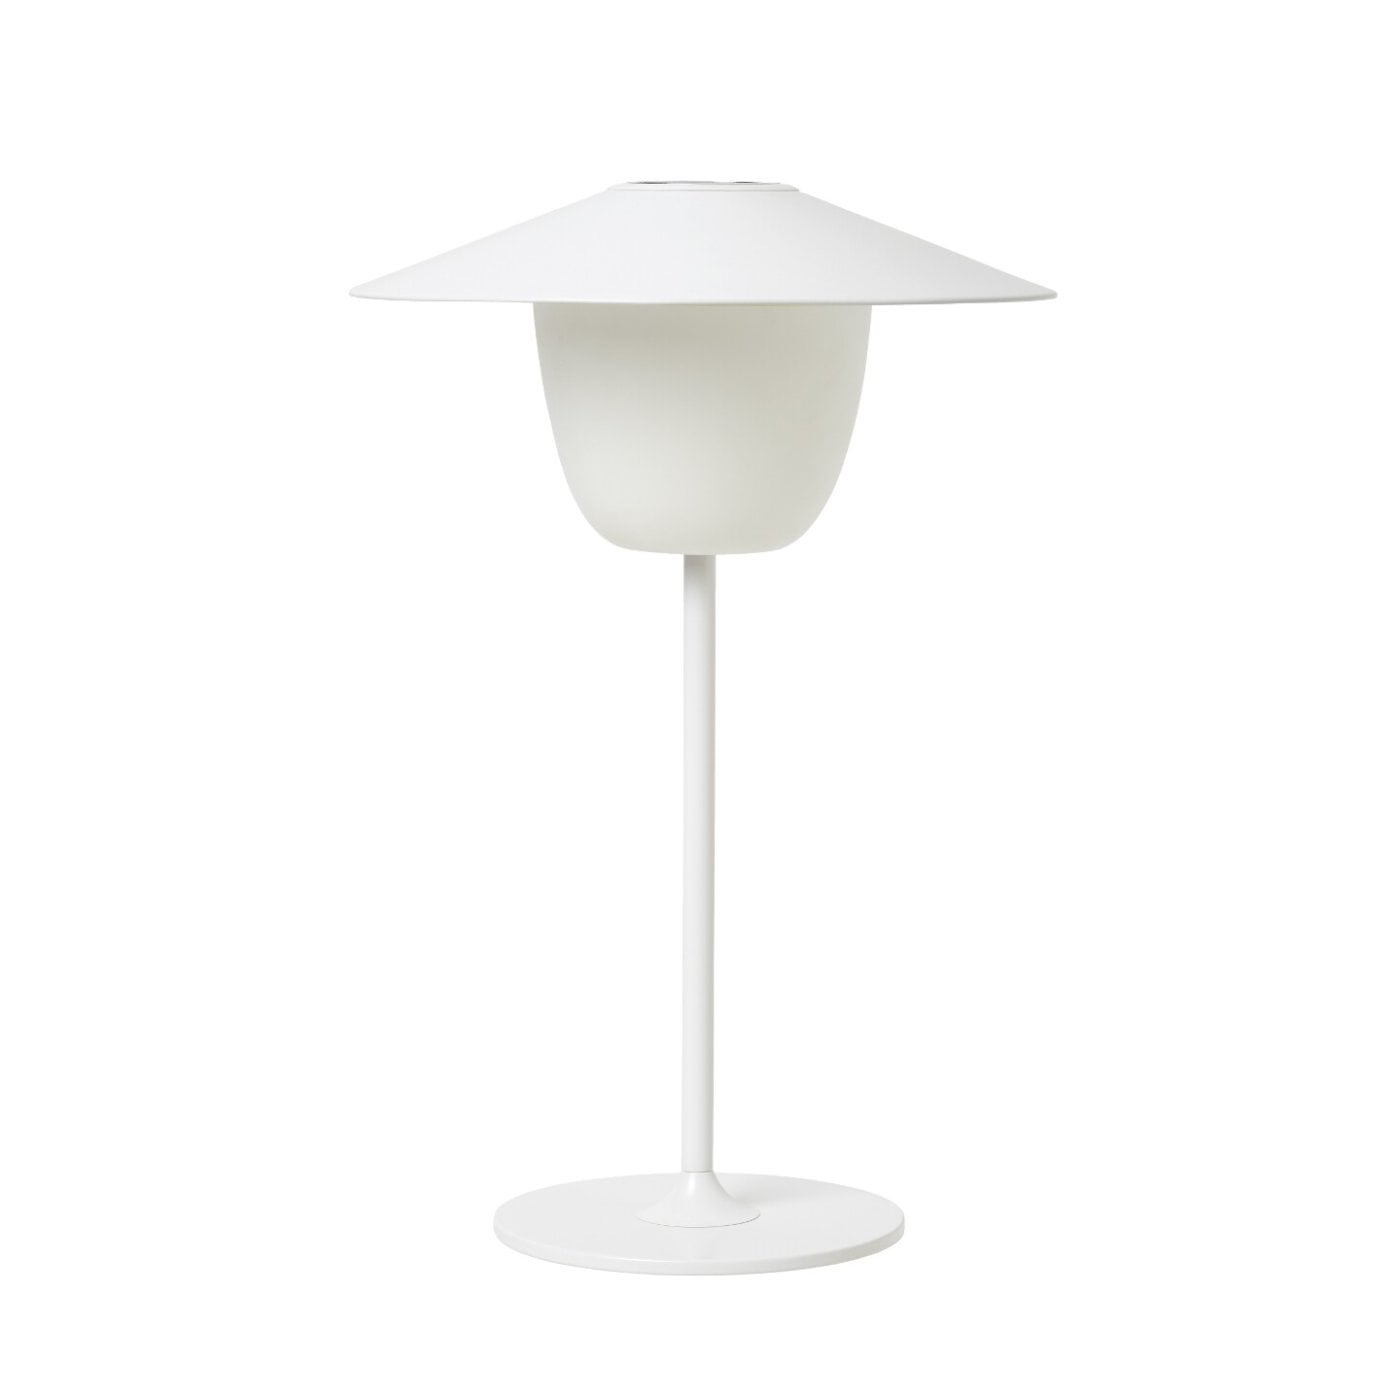 Image of ANI LAMP S White